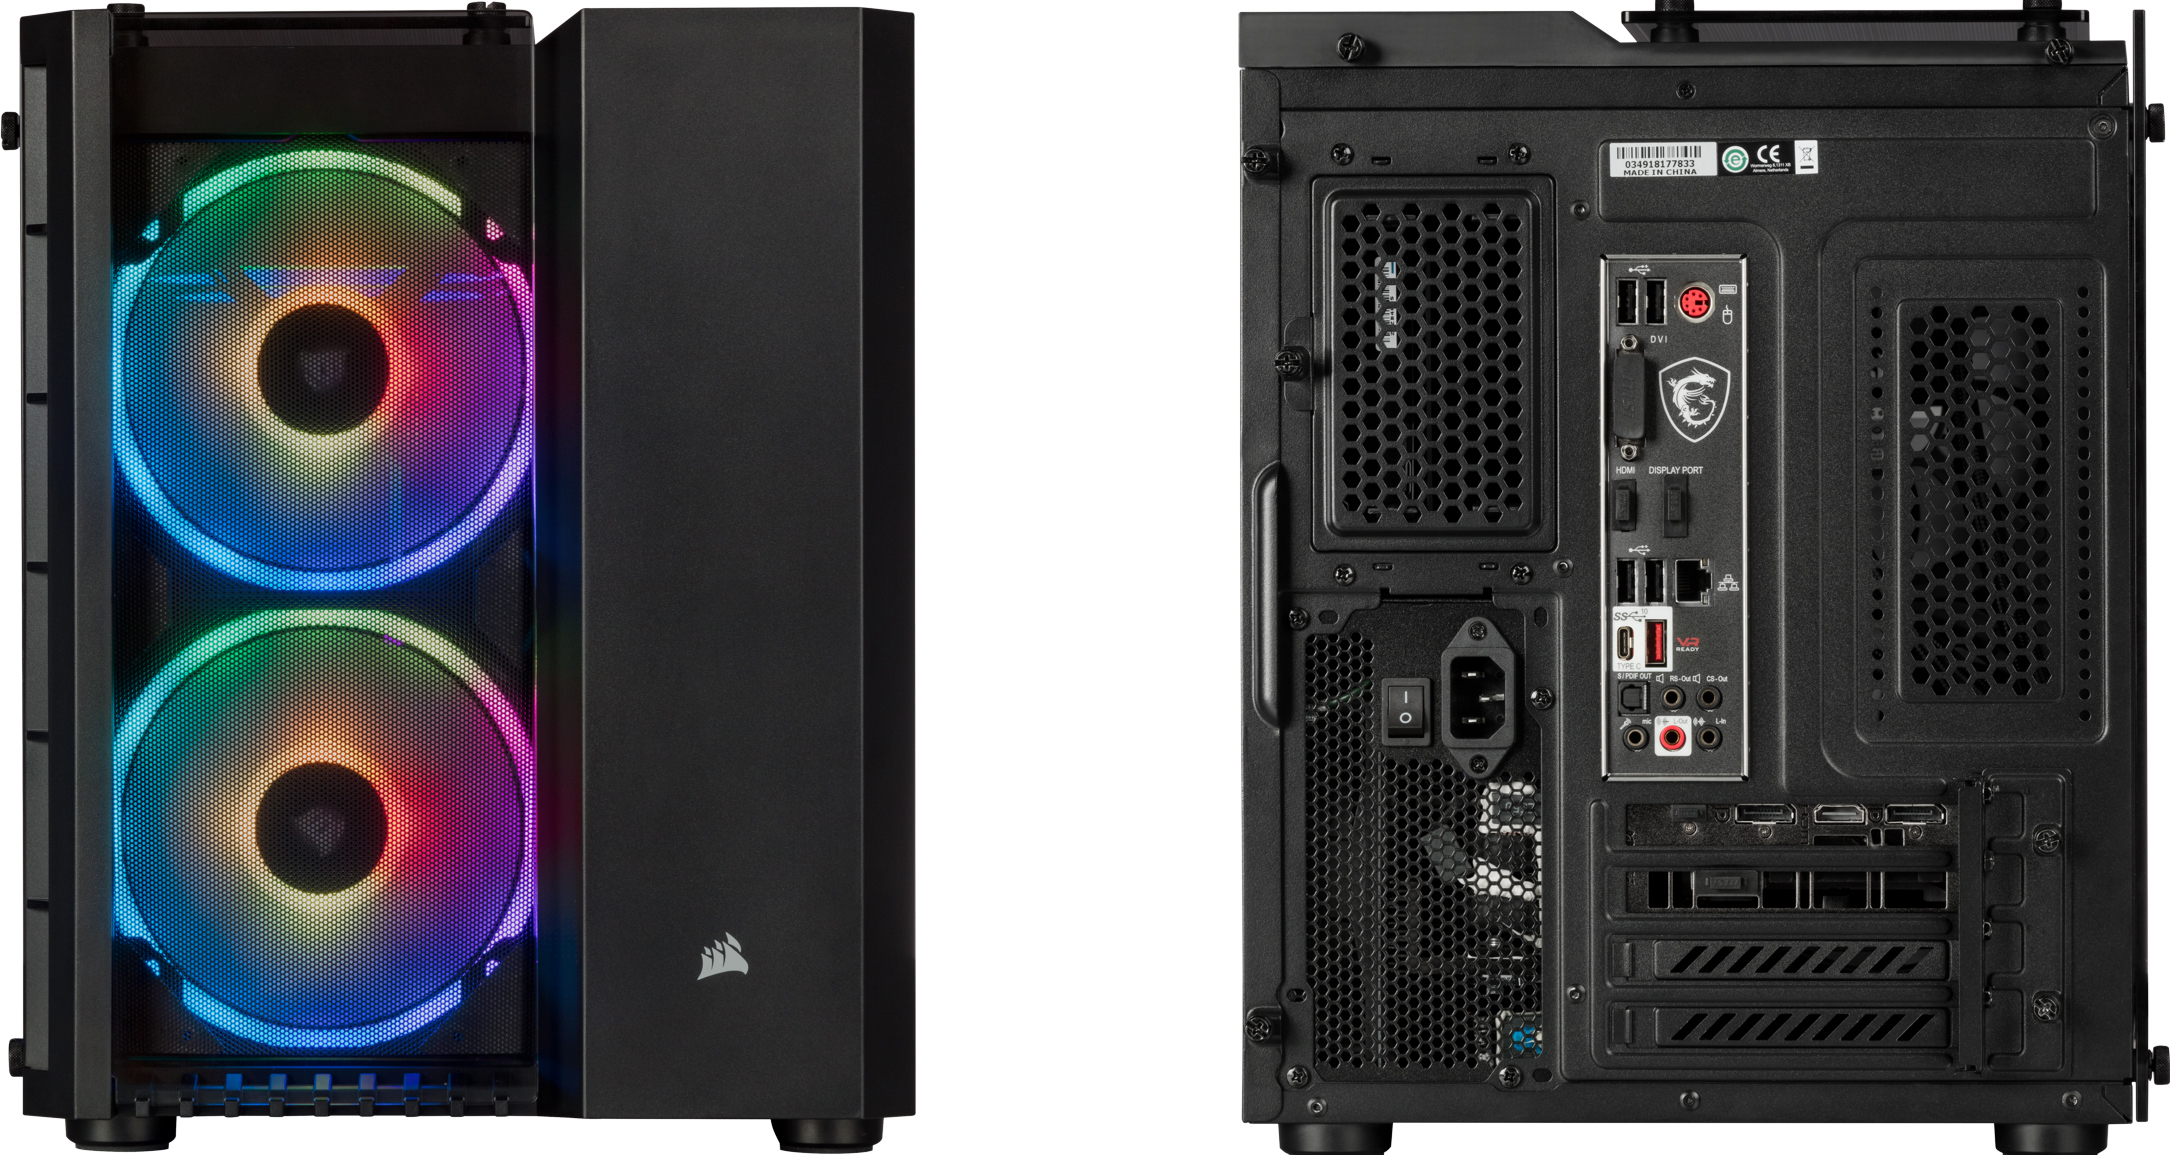 Corsair's Vengeance 5185 PC: Core i7-9700K + GeForce RTX 2080, Lots of RGB